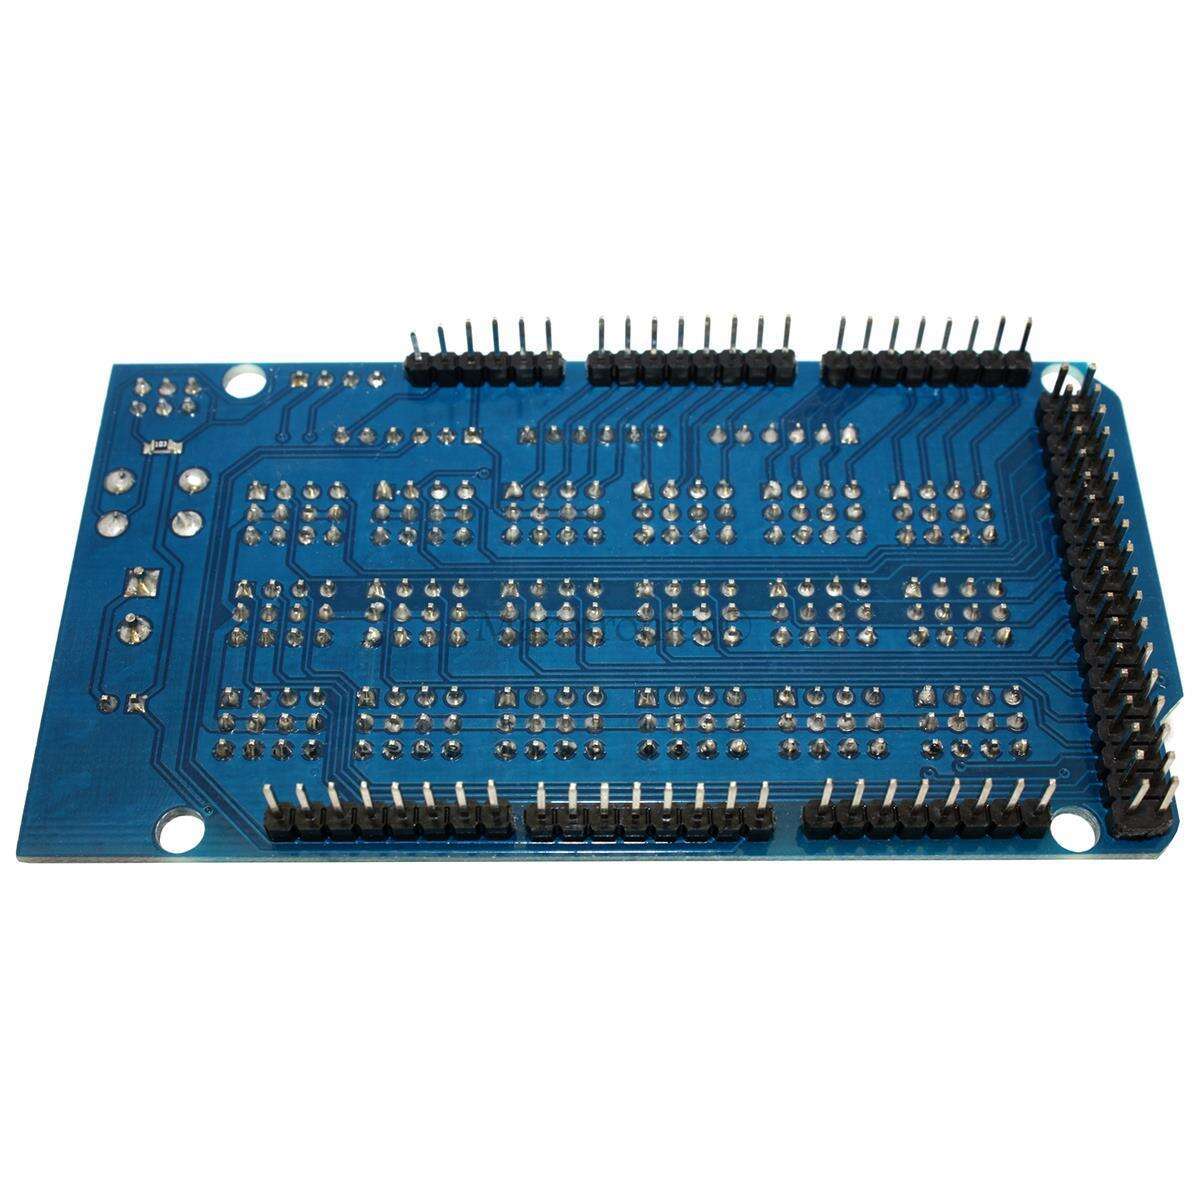 pinout for arduino mega 2560 sensor board